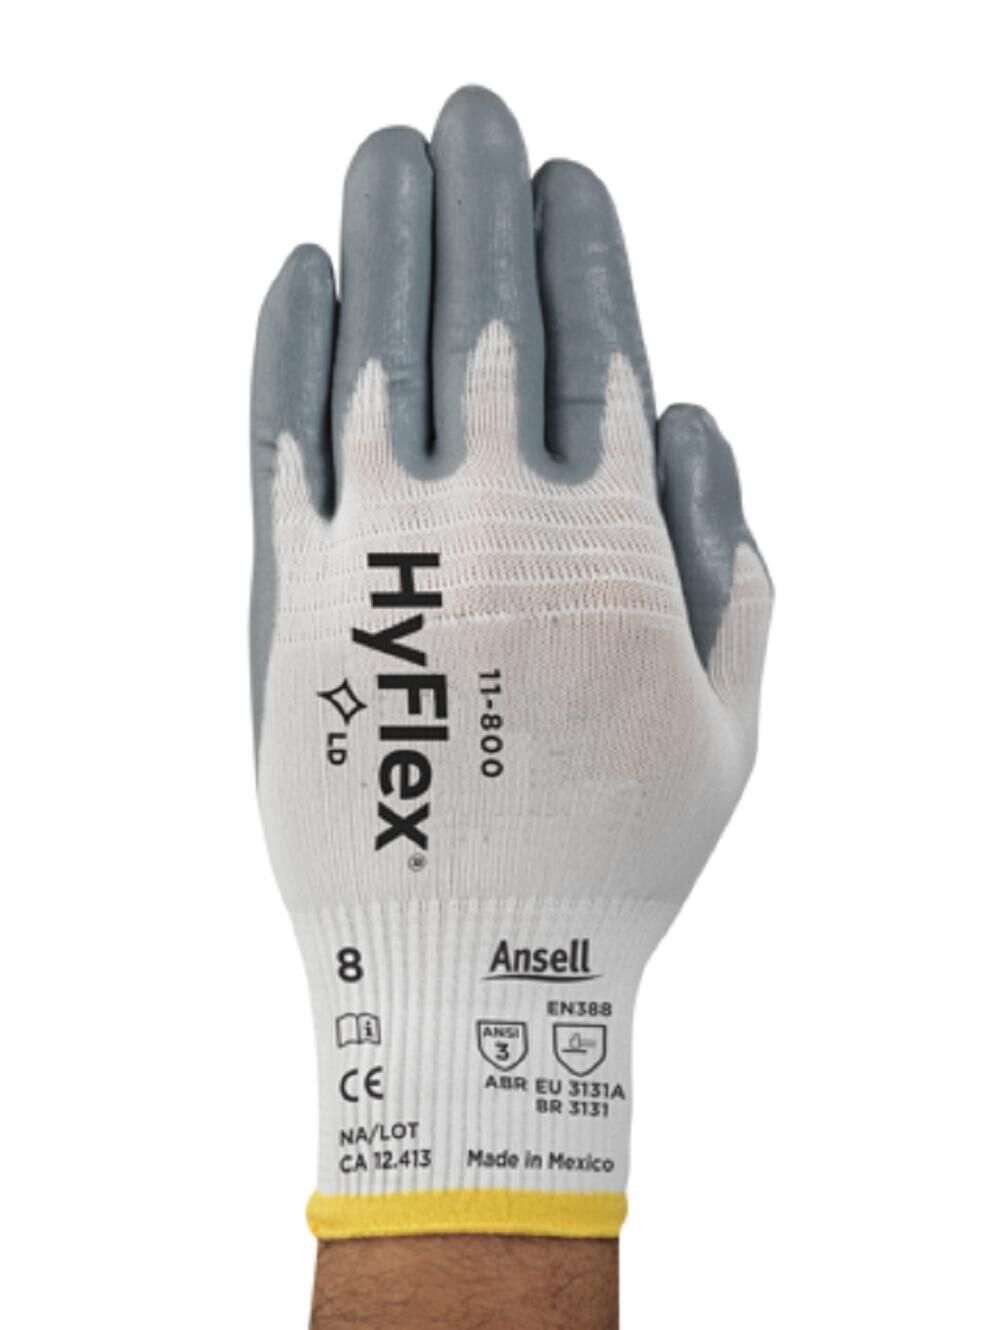 HyFlex Nitrile Glove - Size 11 11-800-11